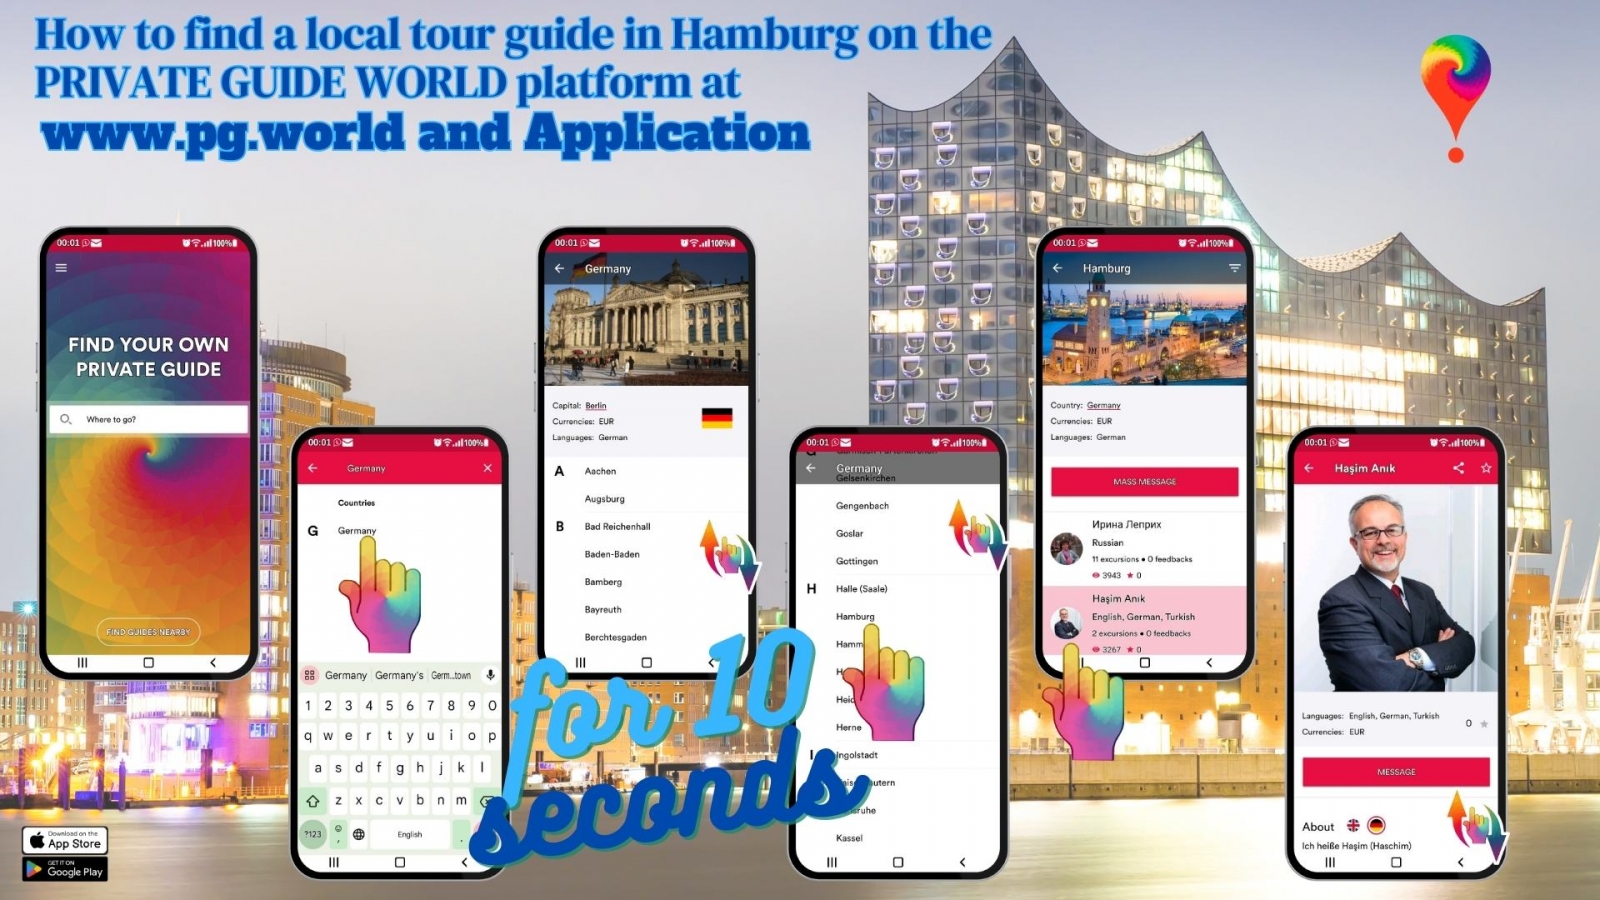 Comment trouver un guide touristique local à Hambourg sur la plateforme PRIVATE GUIDE WORLD